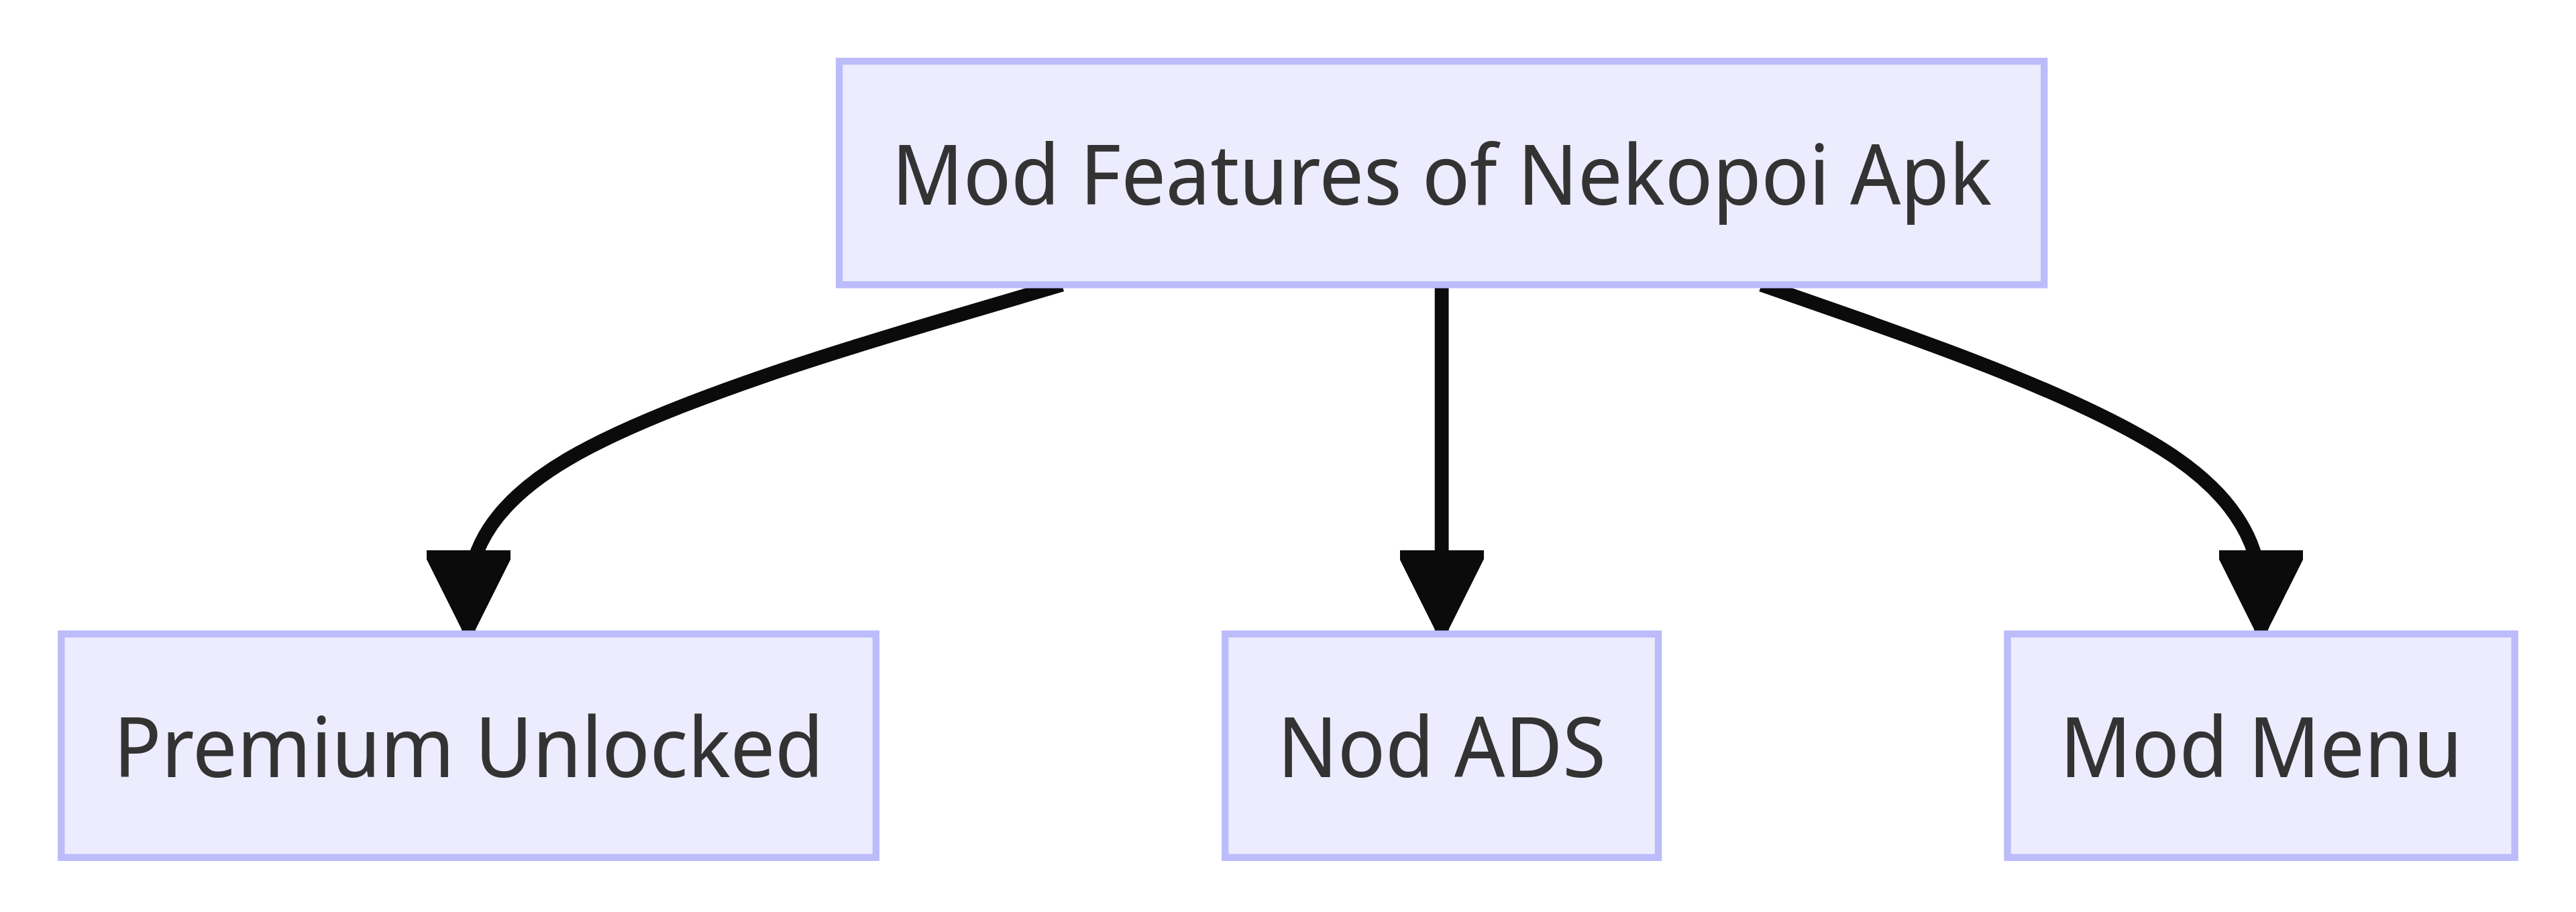 Mod Features of Nekopoi Apk